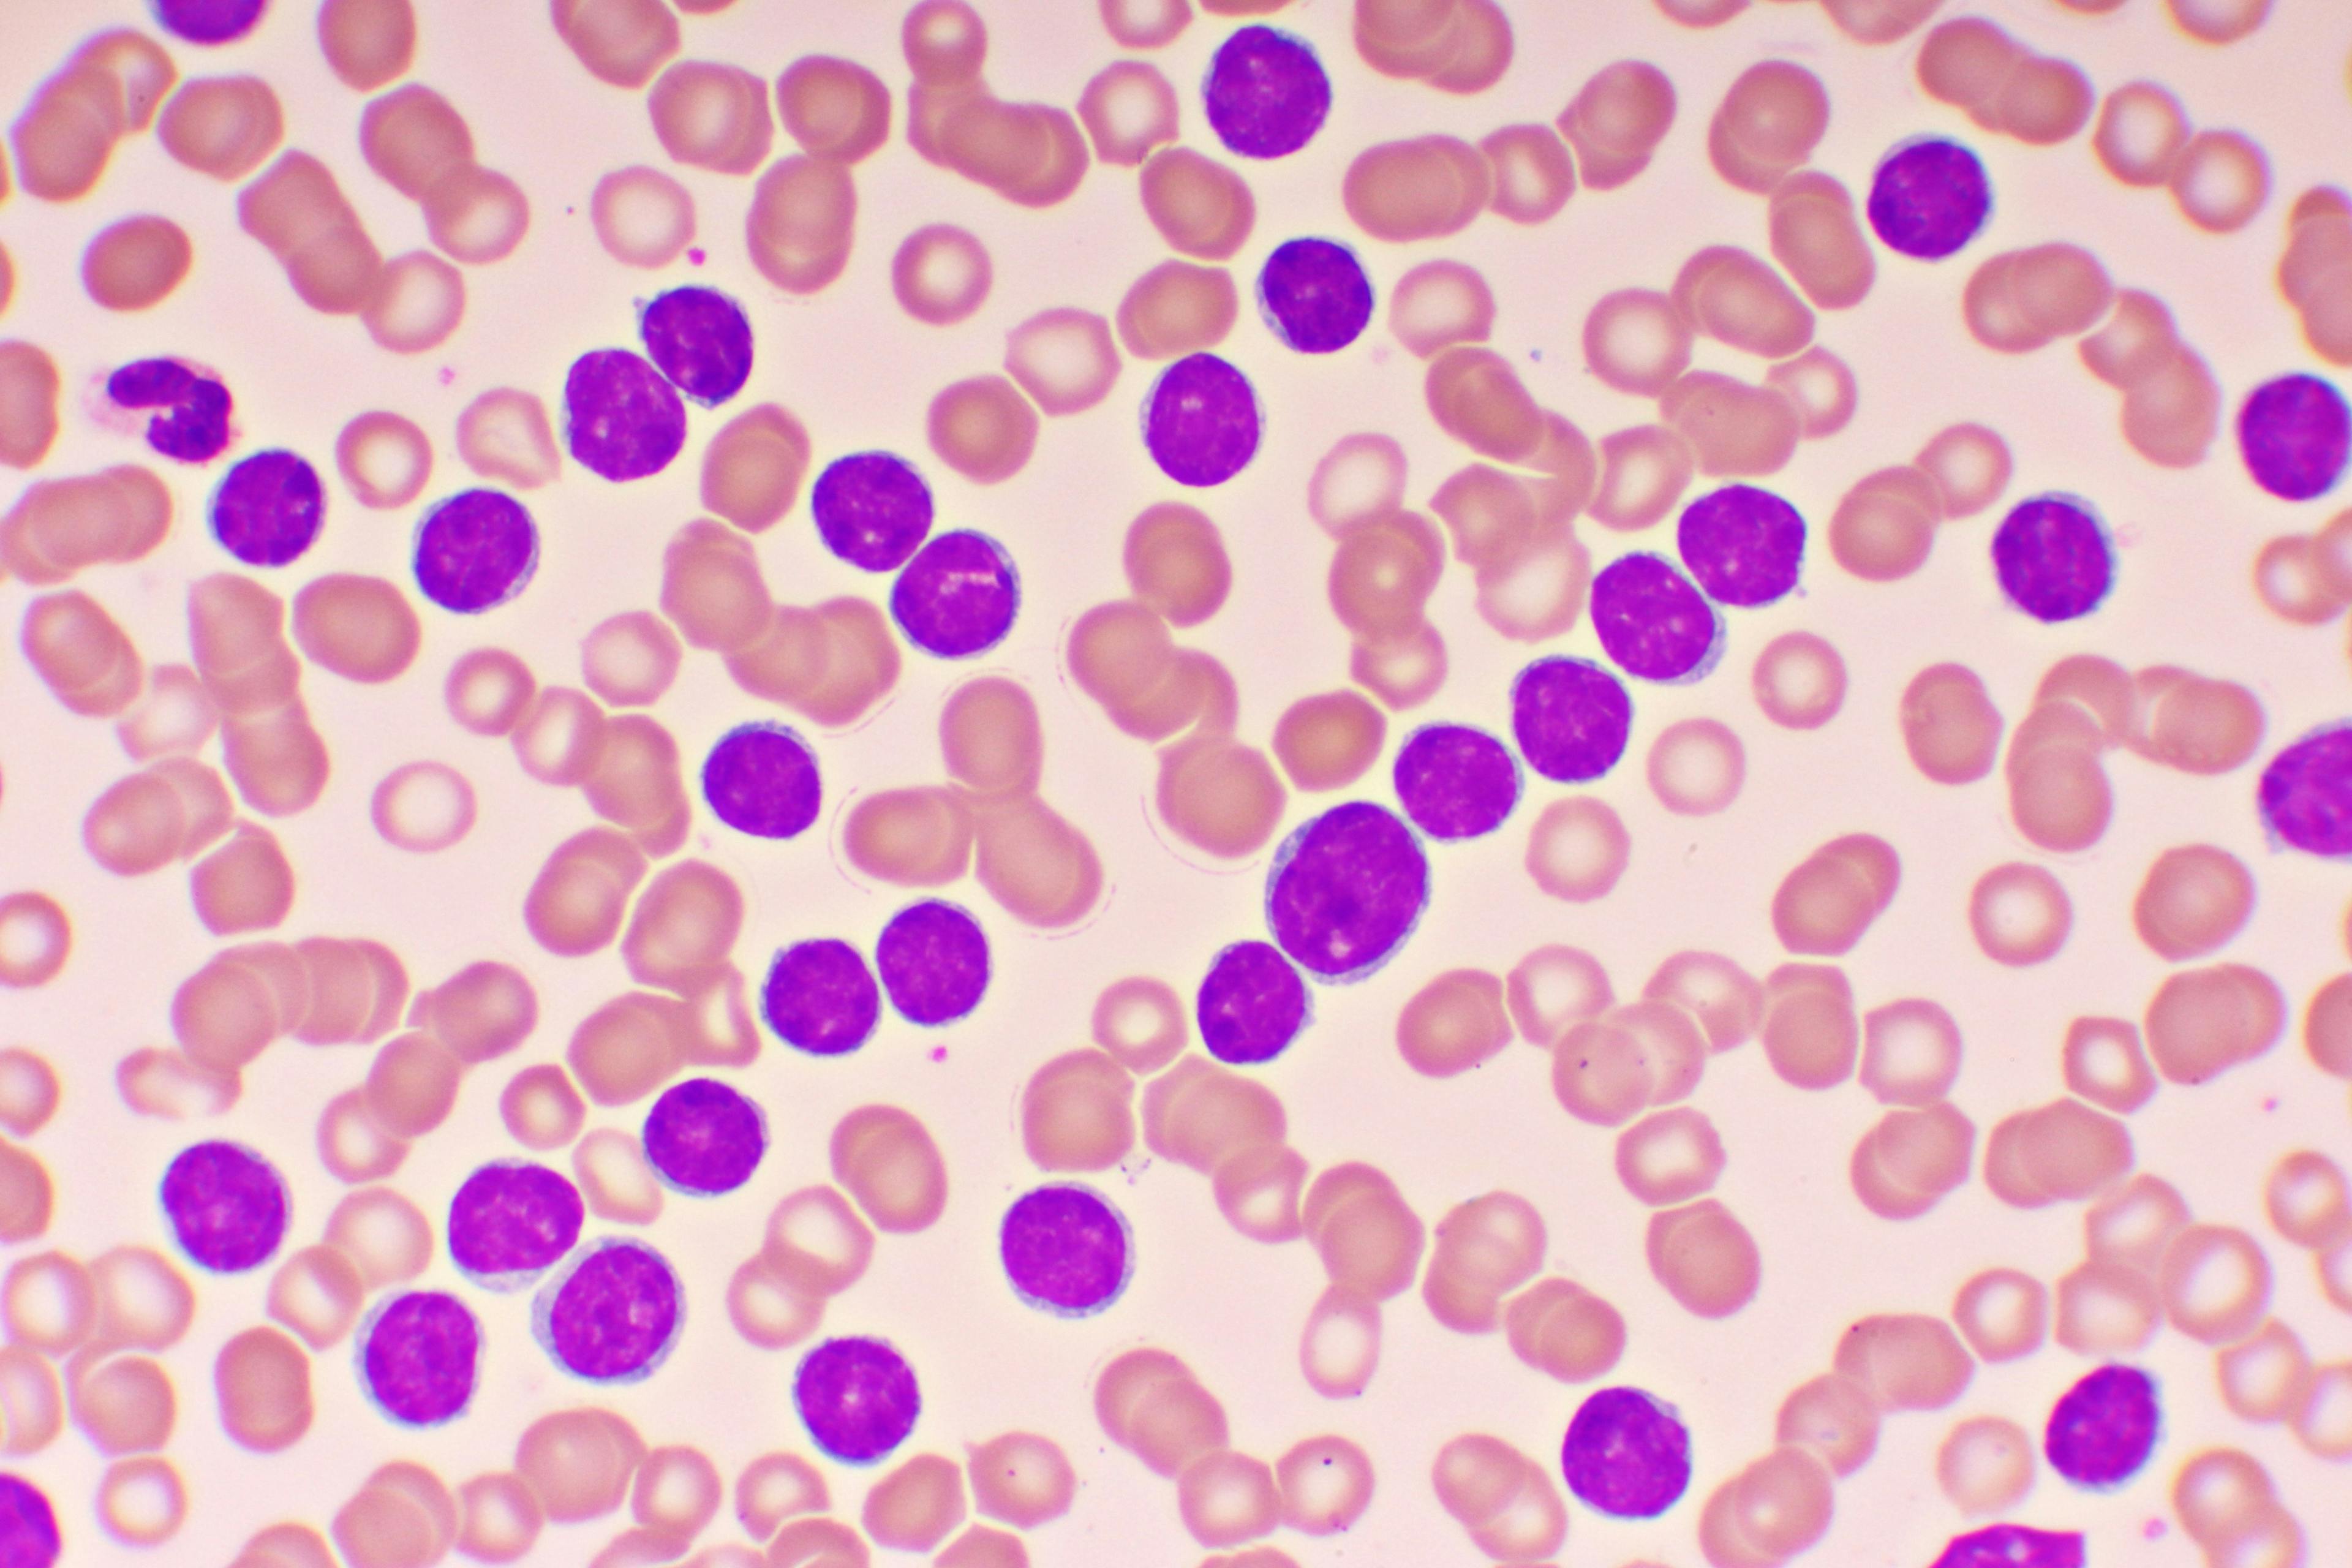 Microscopic view of chronic lymphocytic leukemia, CLL, cells in blood -- Image credit: jarun011 | stock.adobe.com